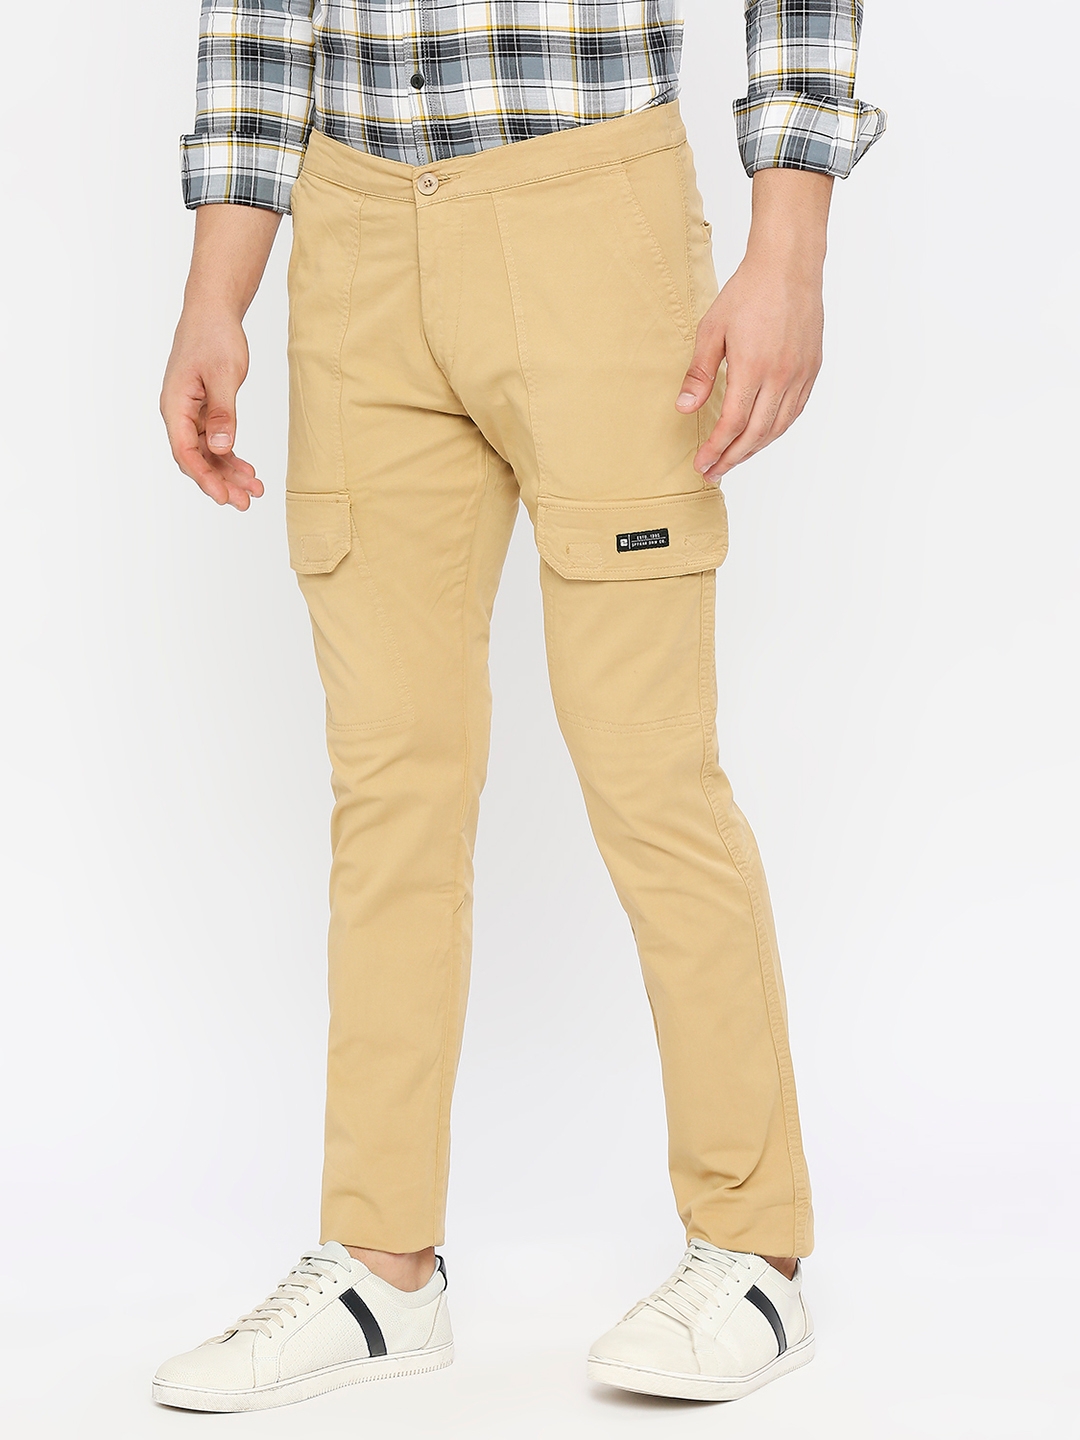 spykar | Spykar Men Light Khaki Cotton Slim Fit Ankle Length Plain Trousers 1